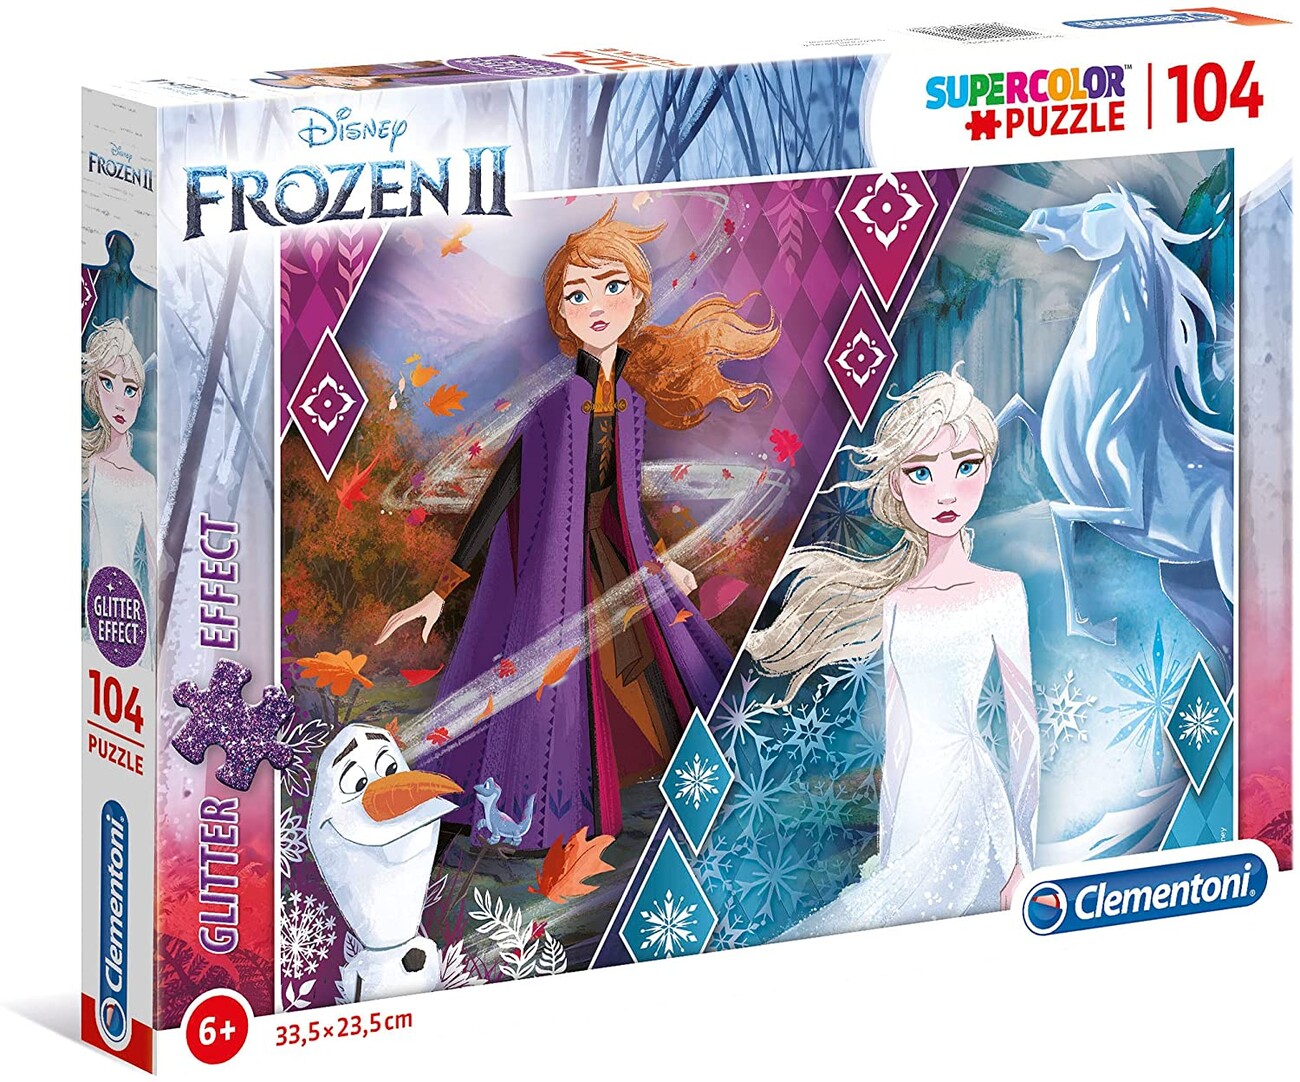 Picasso Pelmel buste Jigsaw puzzle Frozen 2 - Anna & Elsa | Tips for original gifts